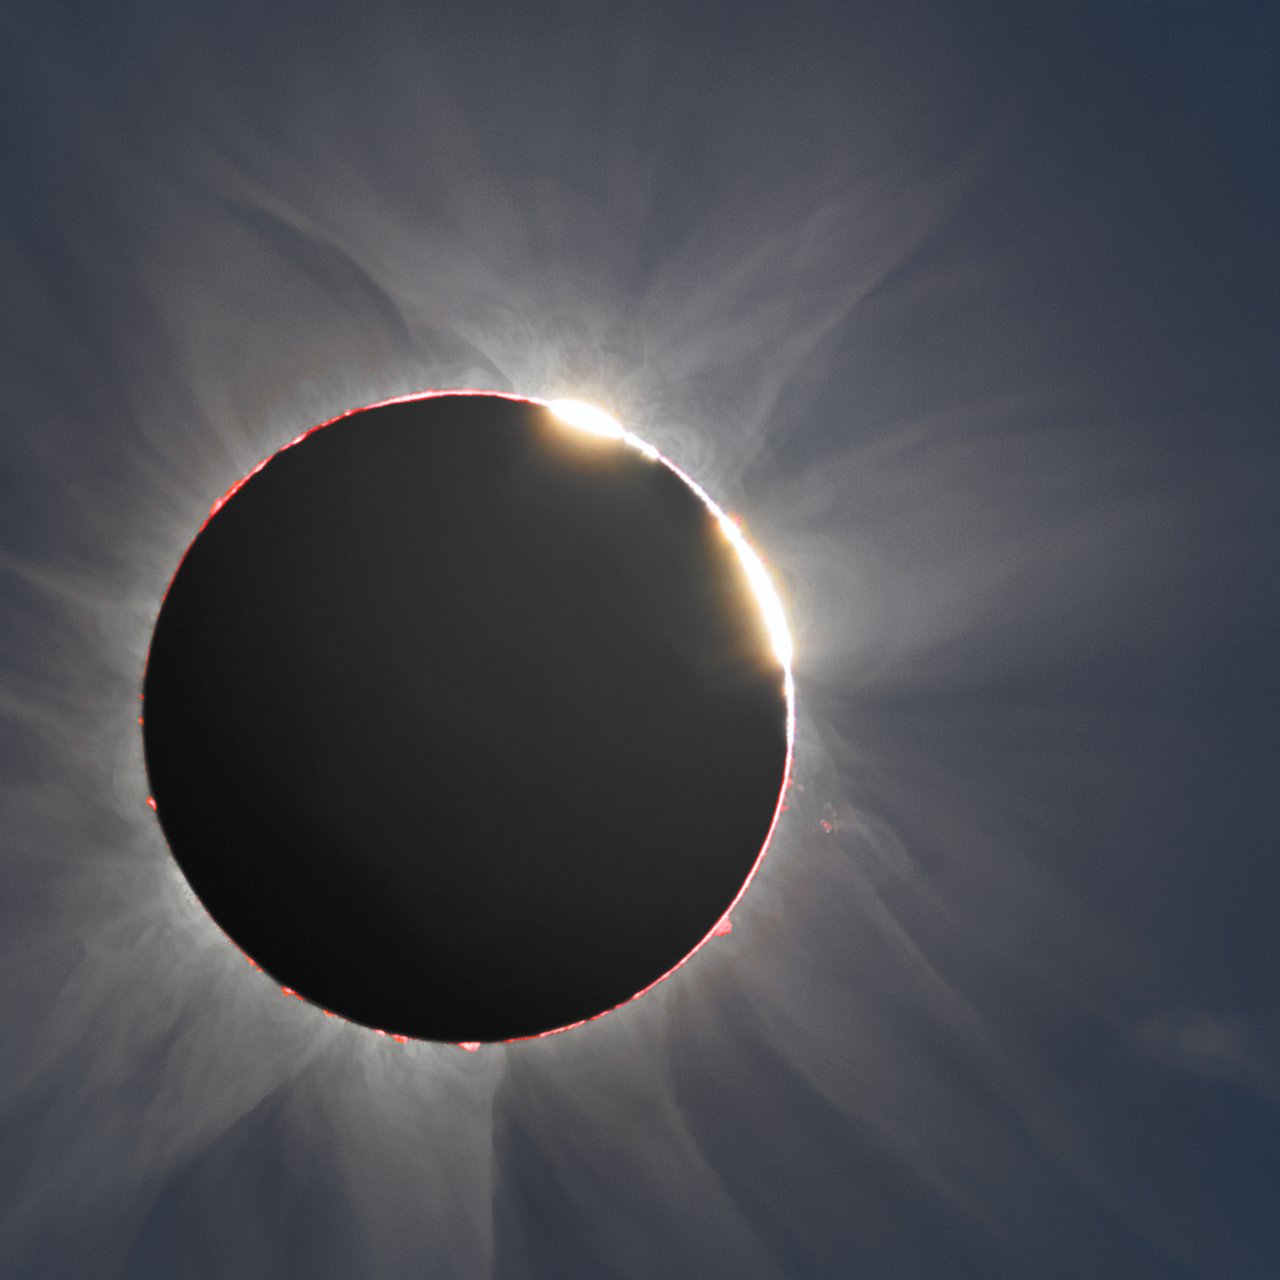 Double diamond ring hybrid solar eclipse 2013 Horalek